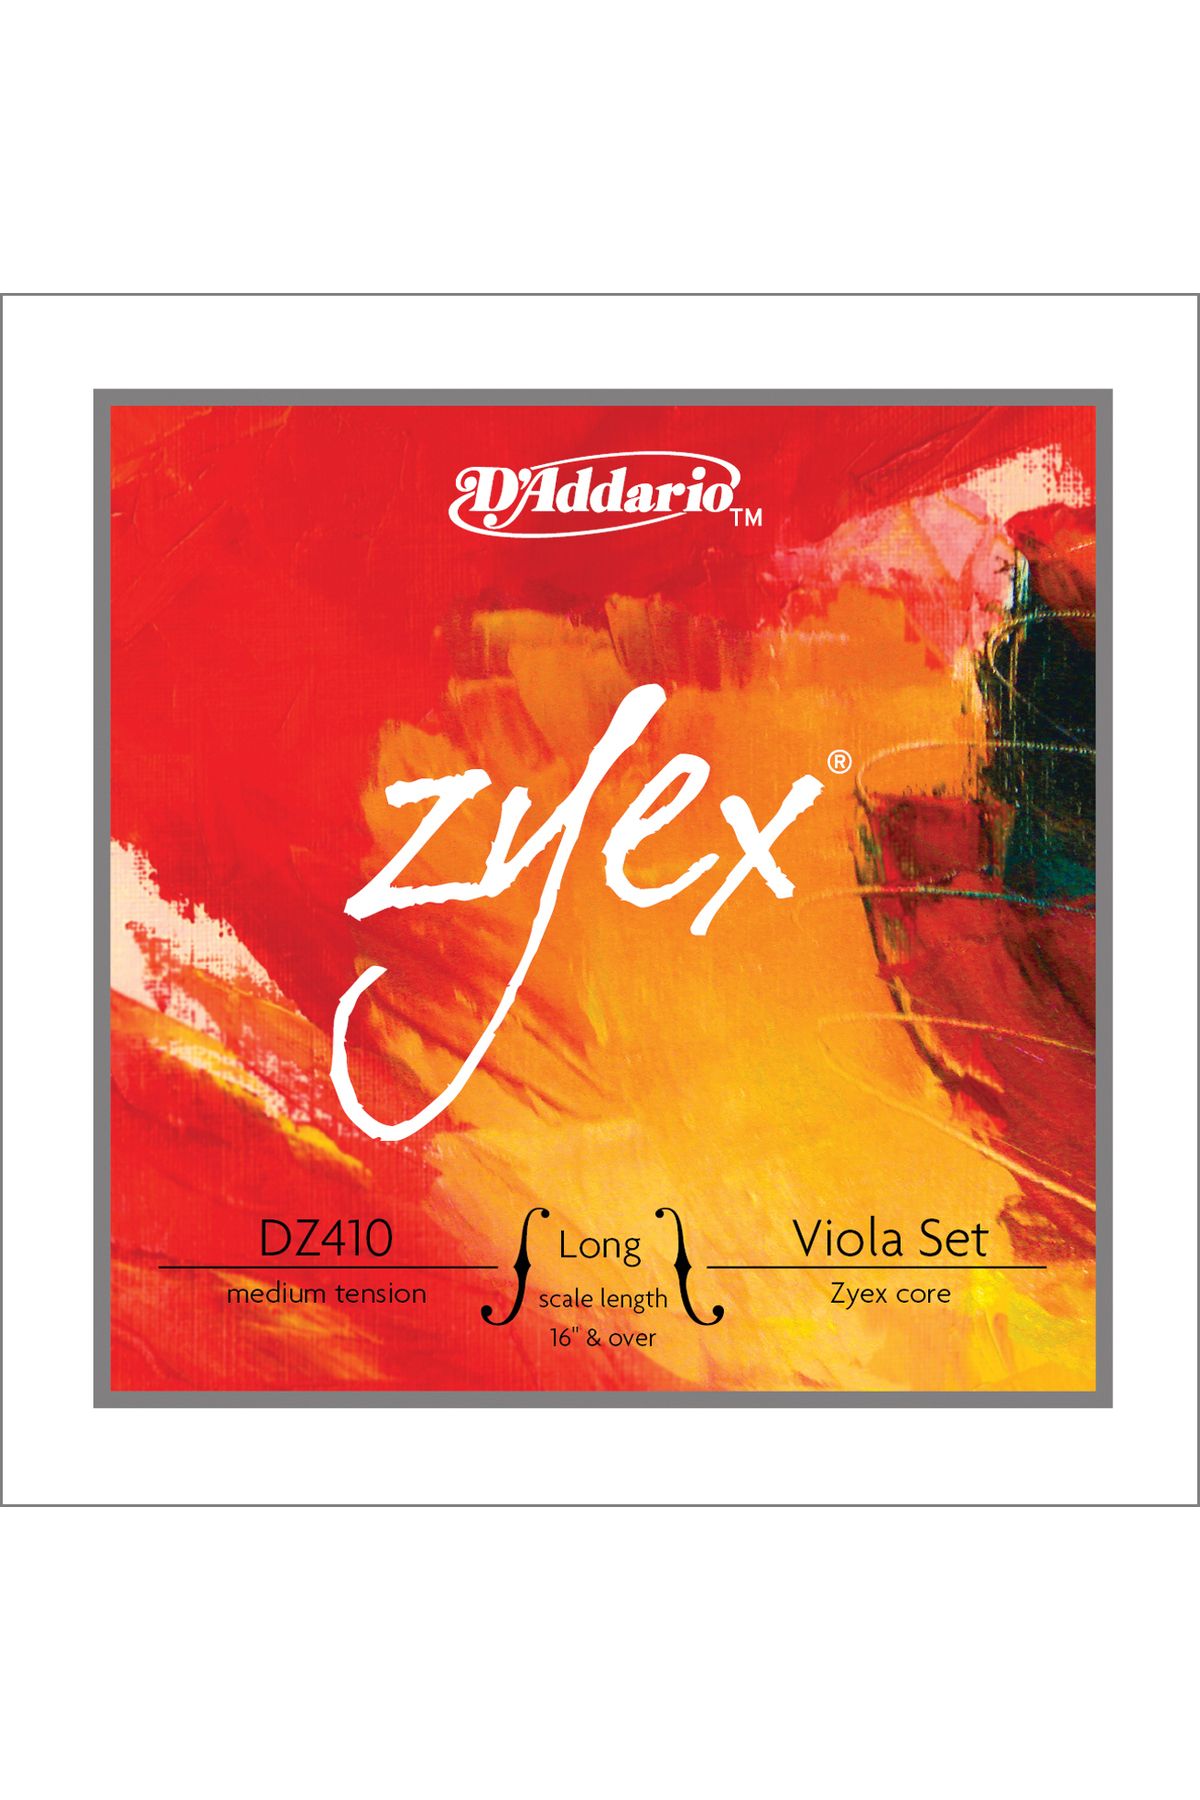 D'Addario Dz410lm Viola Tel Set, Zyex, Long Scale, Medıum Tensıon Vıola Teli